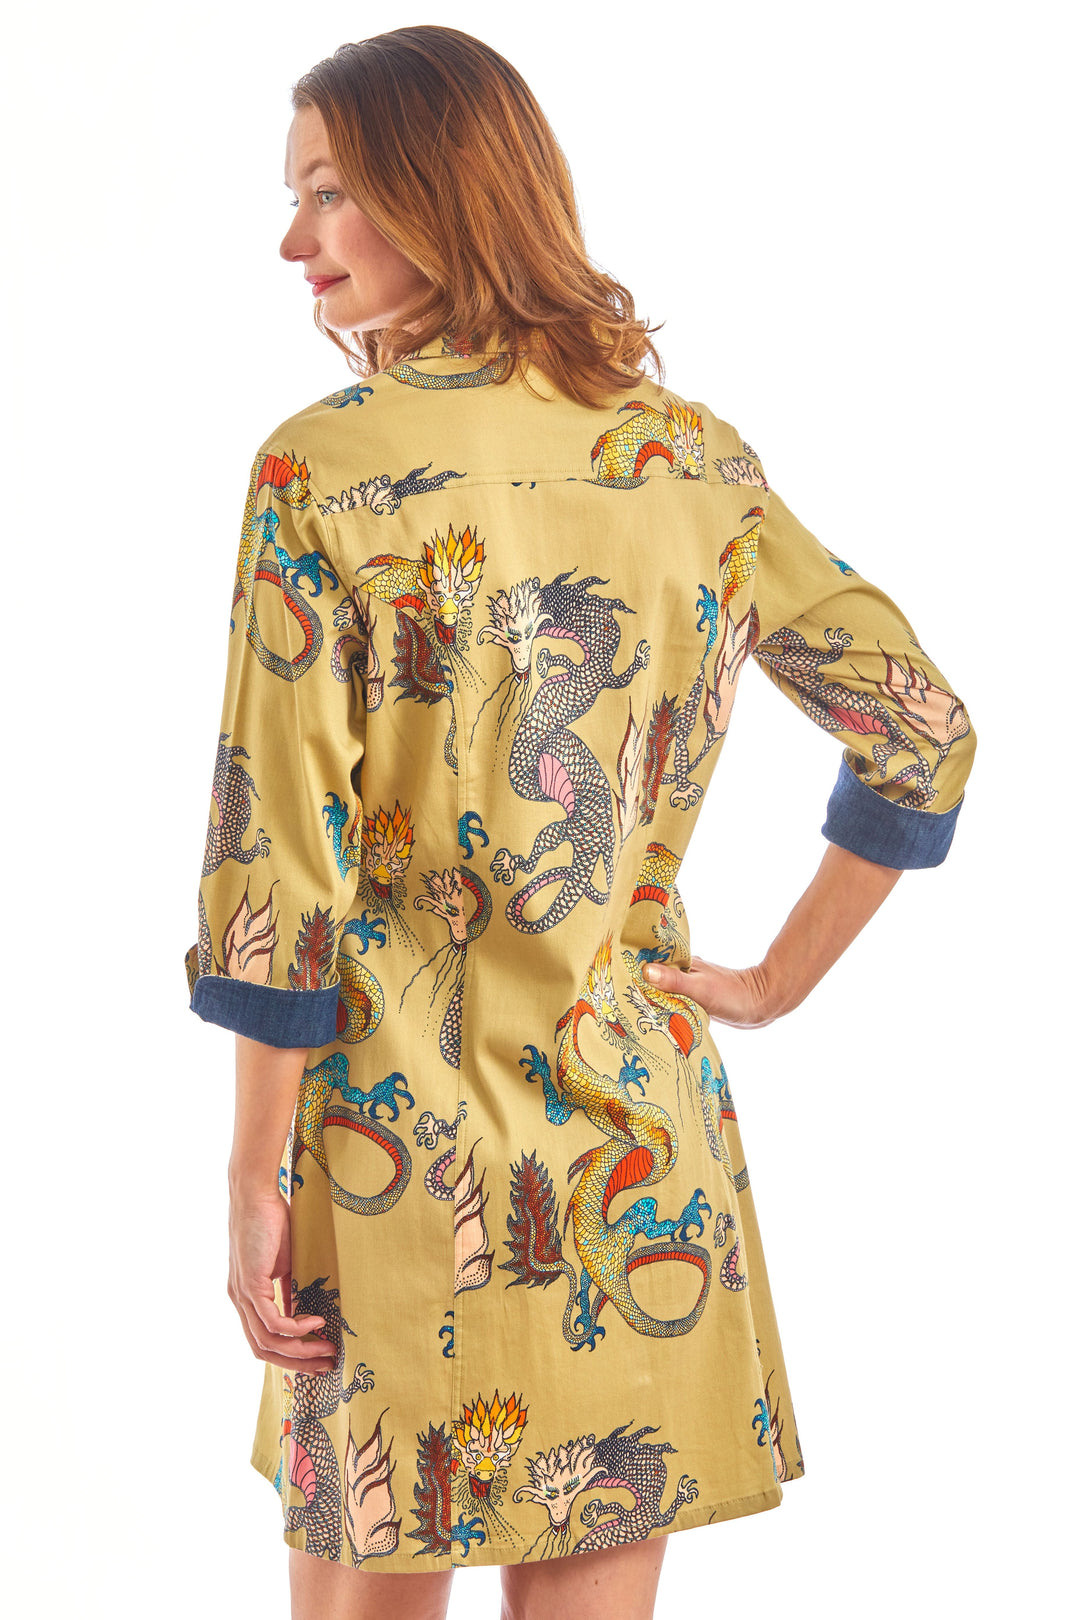 Dizzy-Lizzie Sag Harbor Shirt Dress Khaki Dragons Print